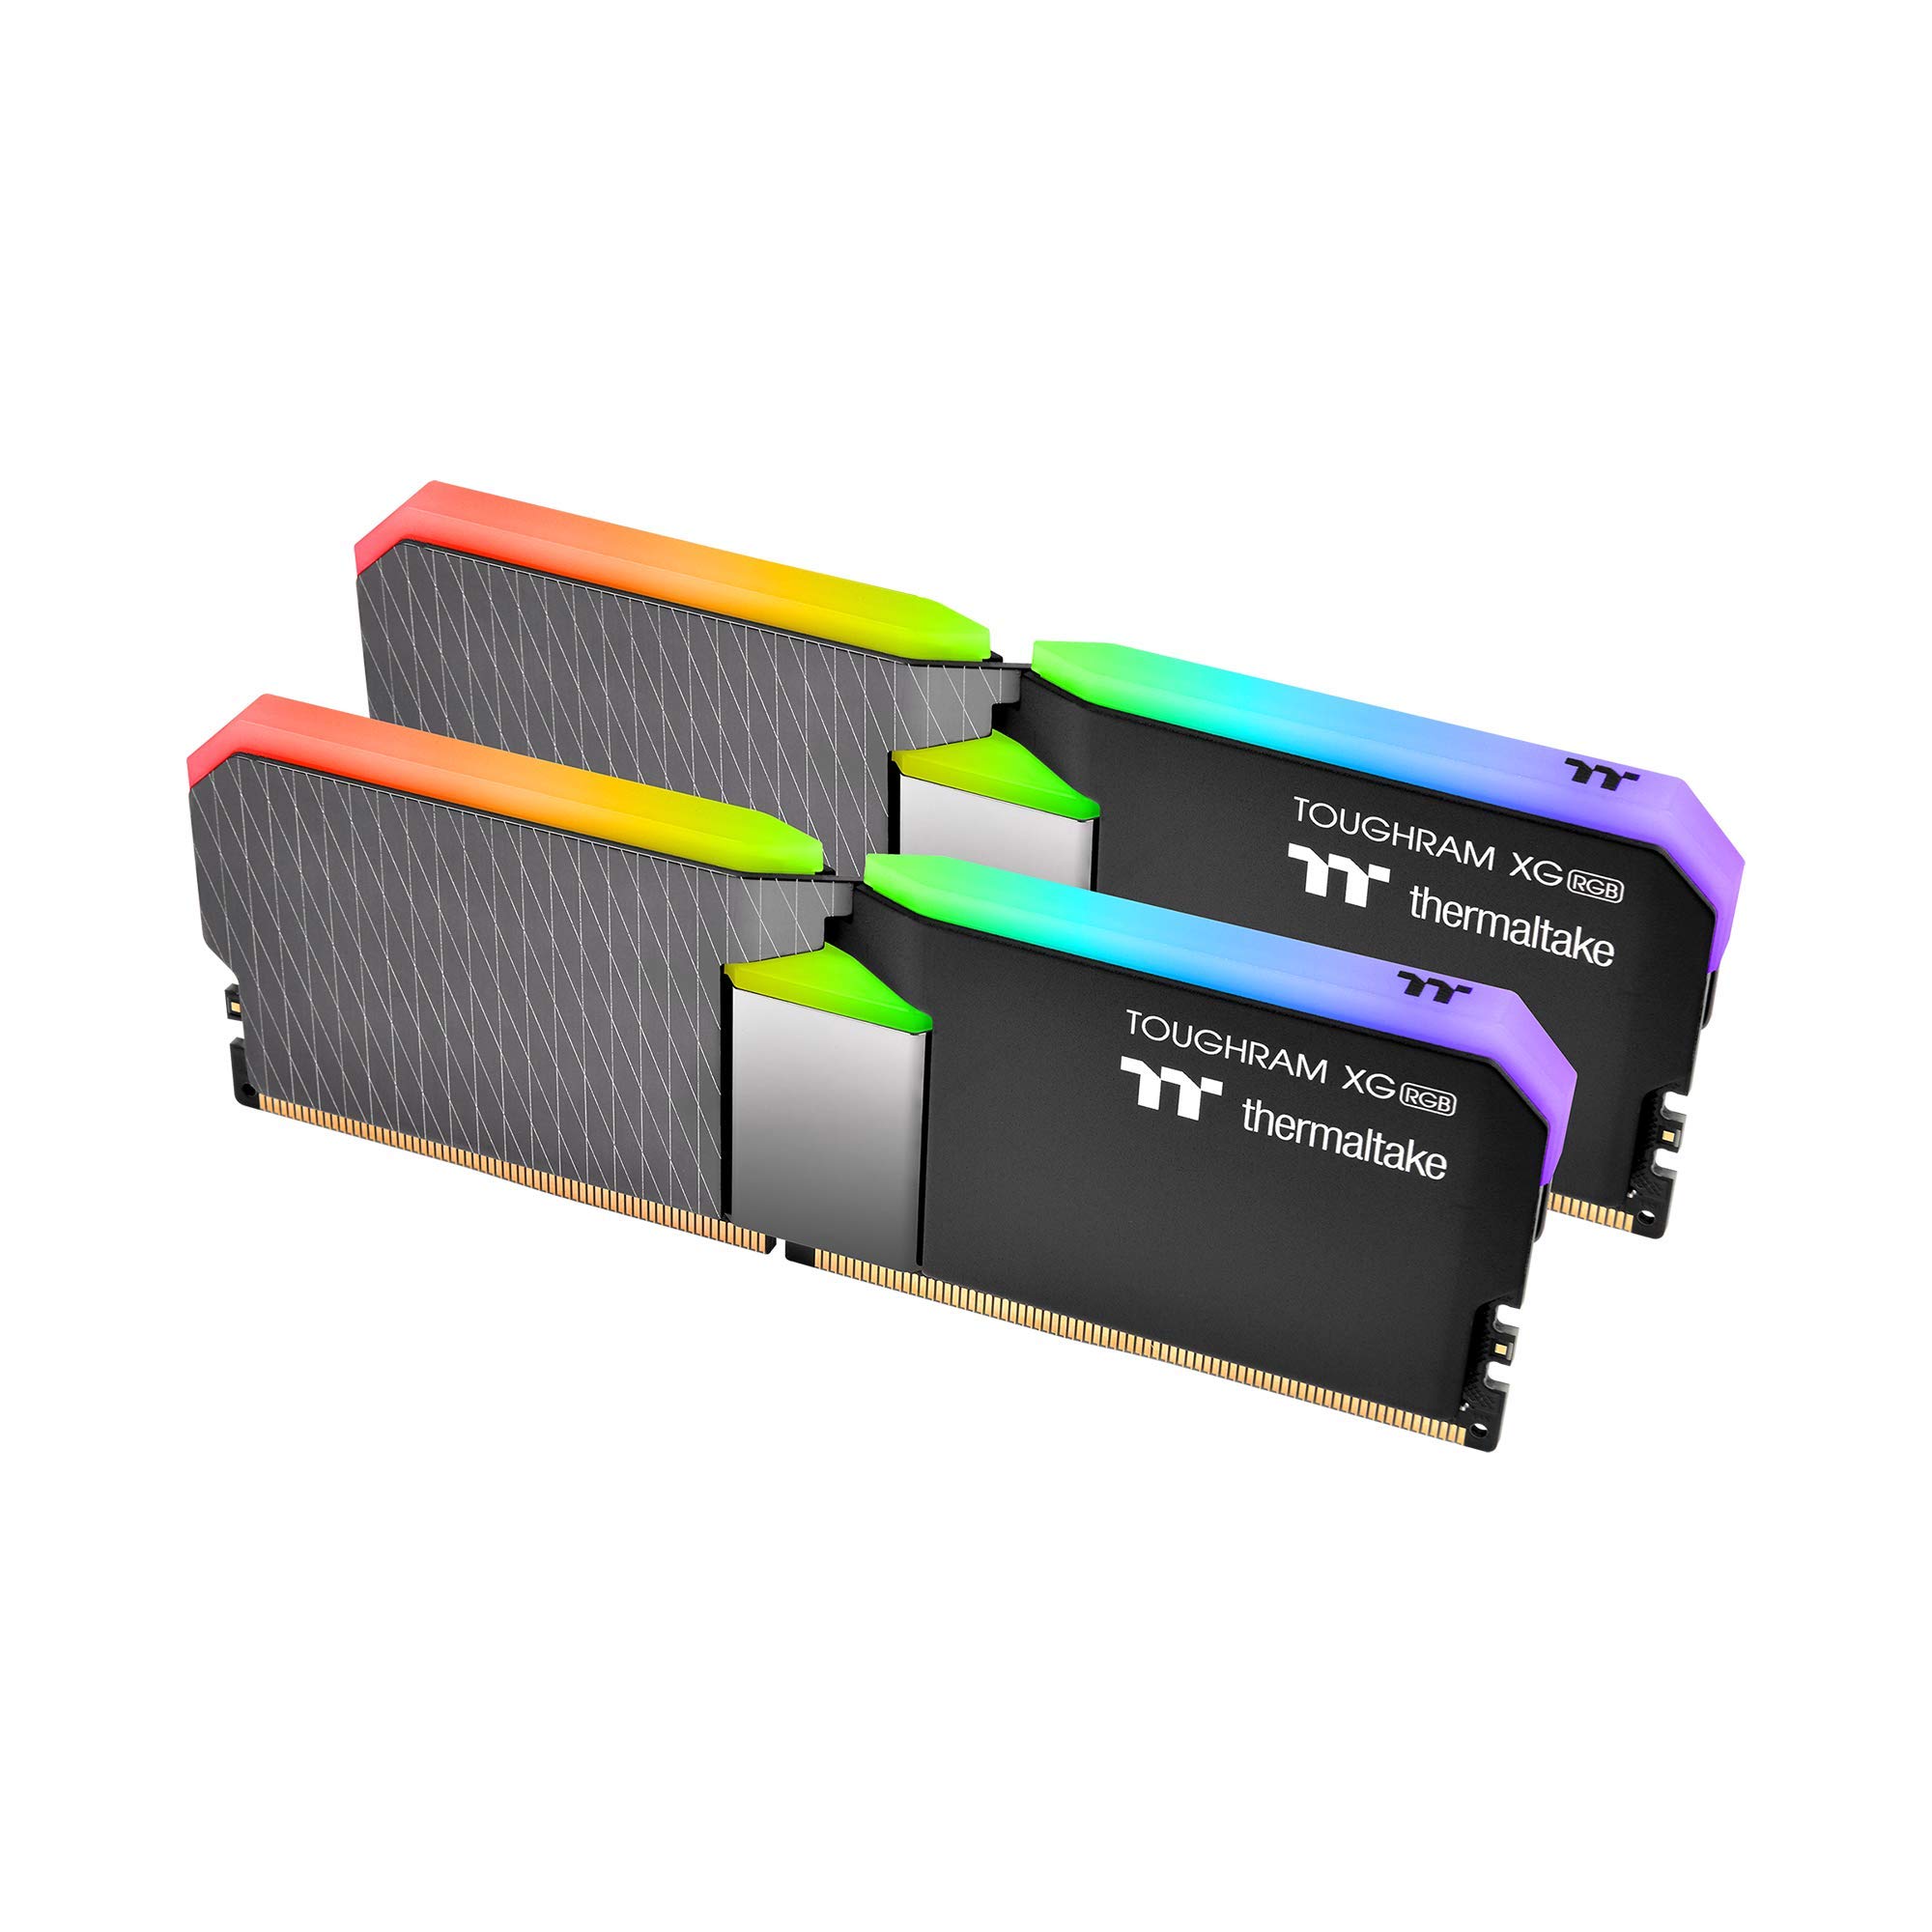 Thermaltake TOUGHRAM XG RGB DDR4 4600MHz 16GB 8GB x 2 16.80万色 RGB AlexaRazer Chroma5V マザーボード 同期ケー